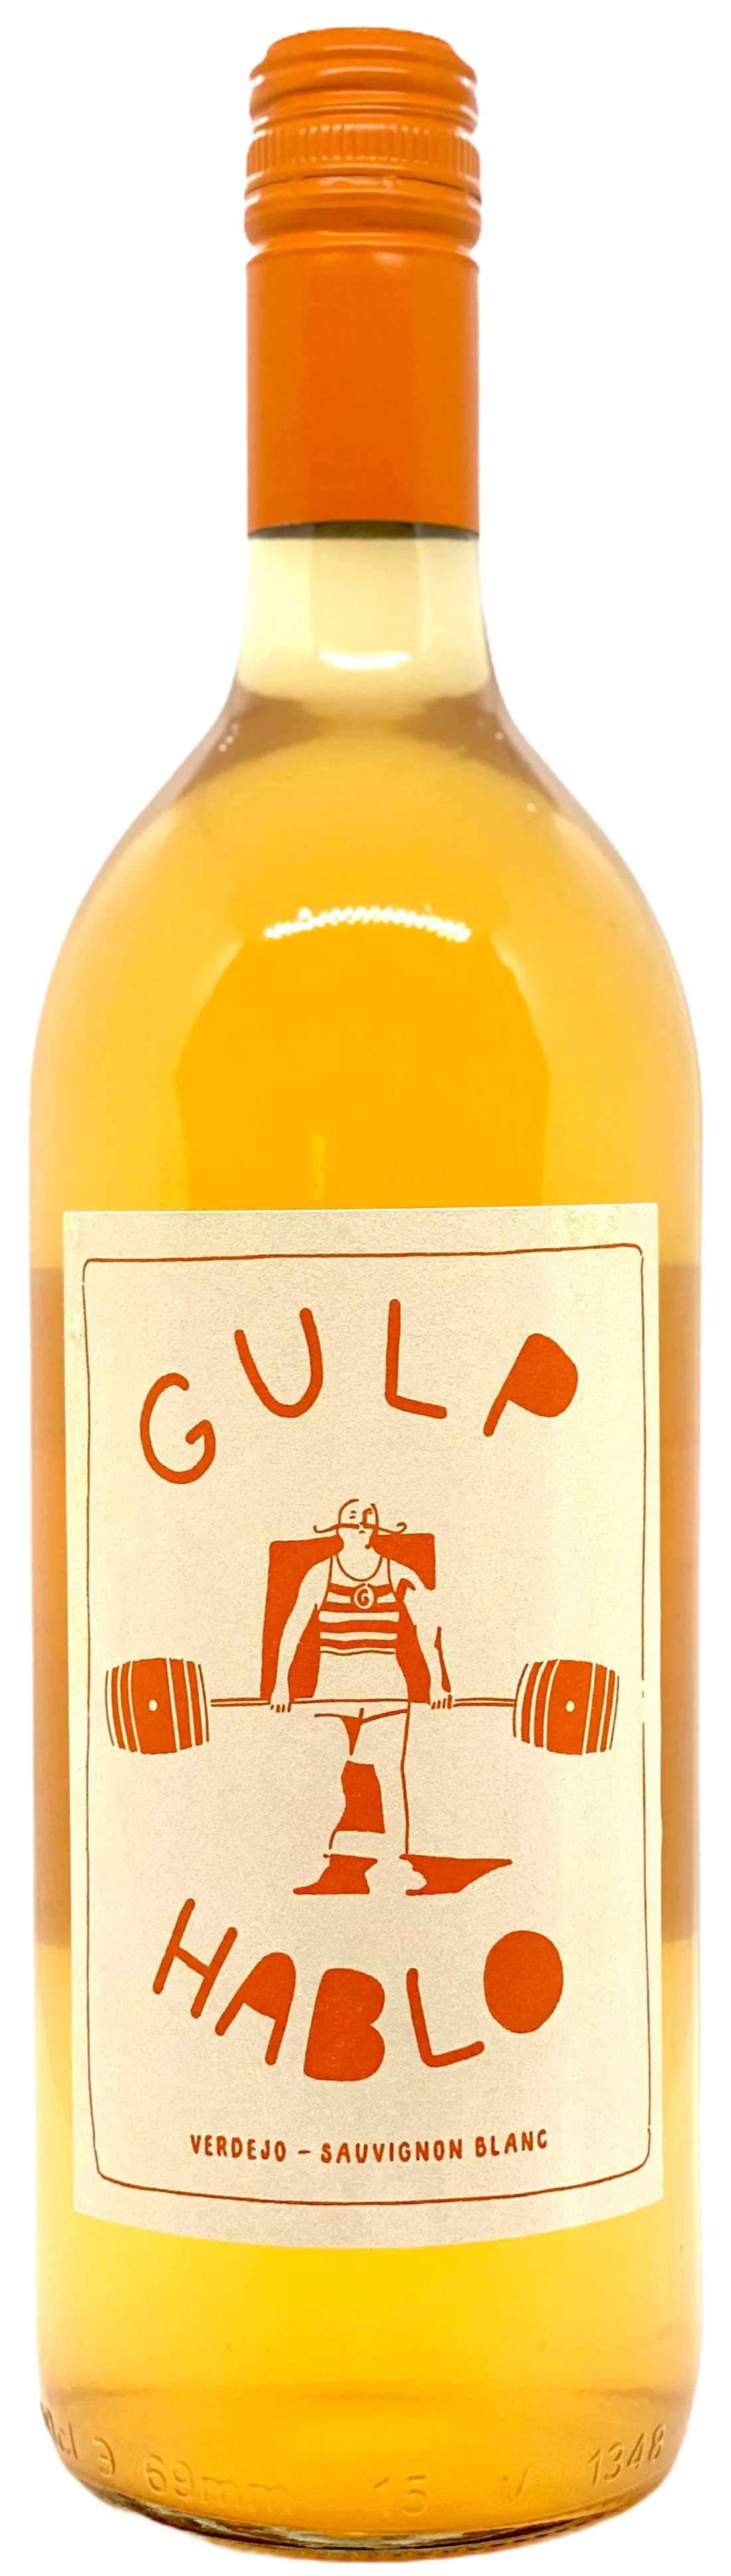 Gulp Hablo (1L Bottle)